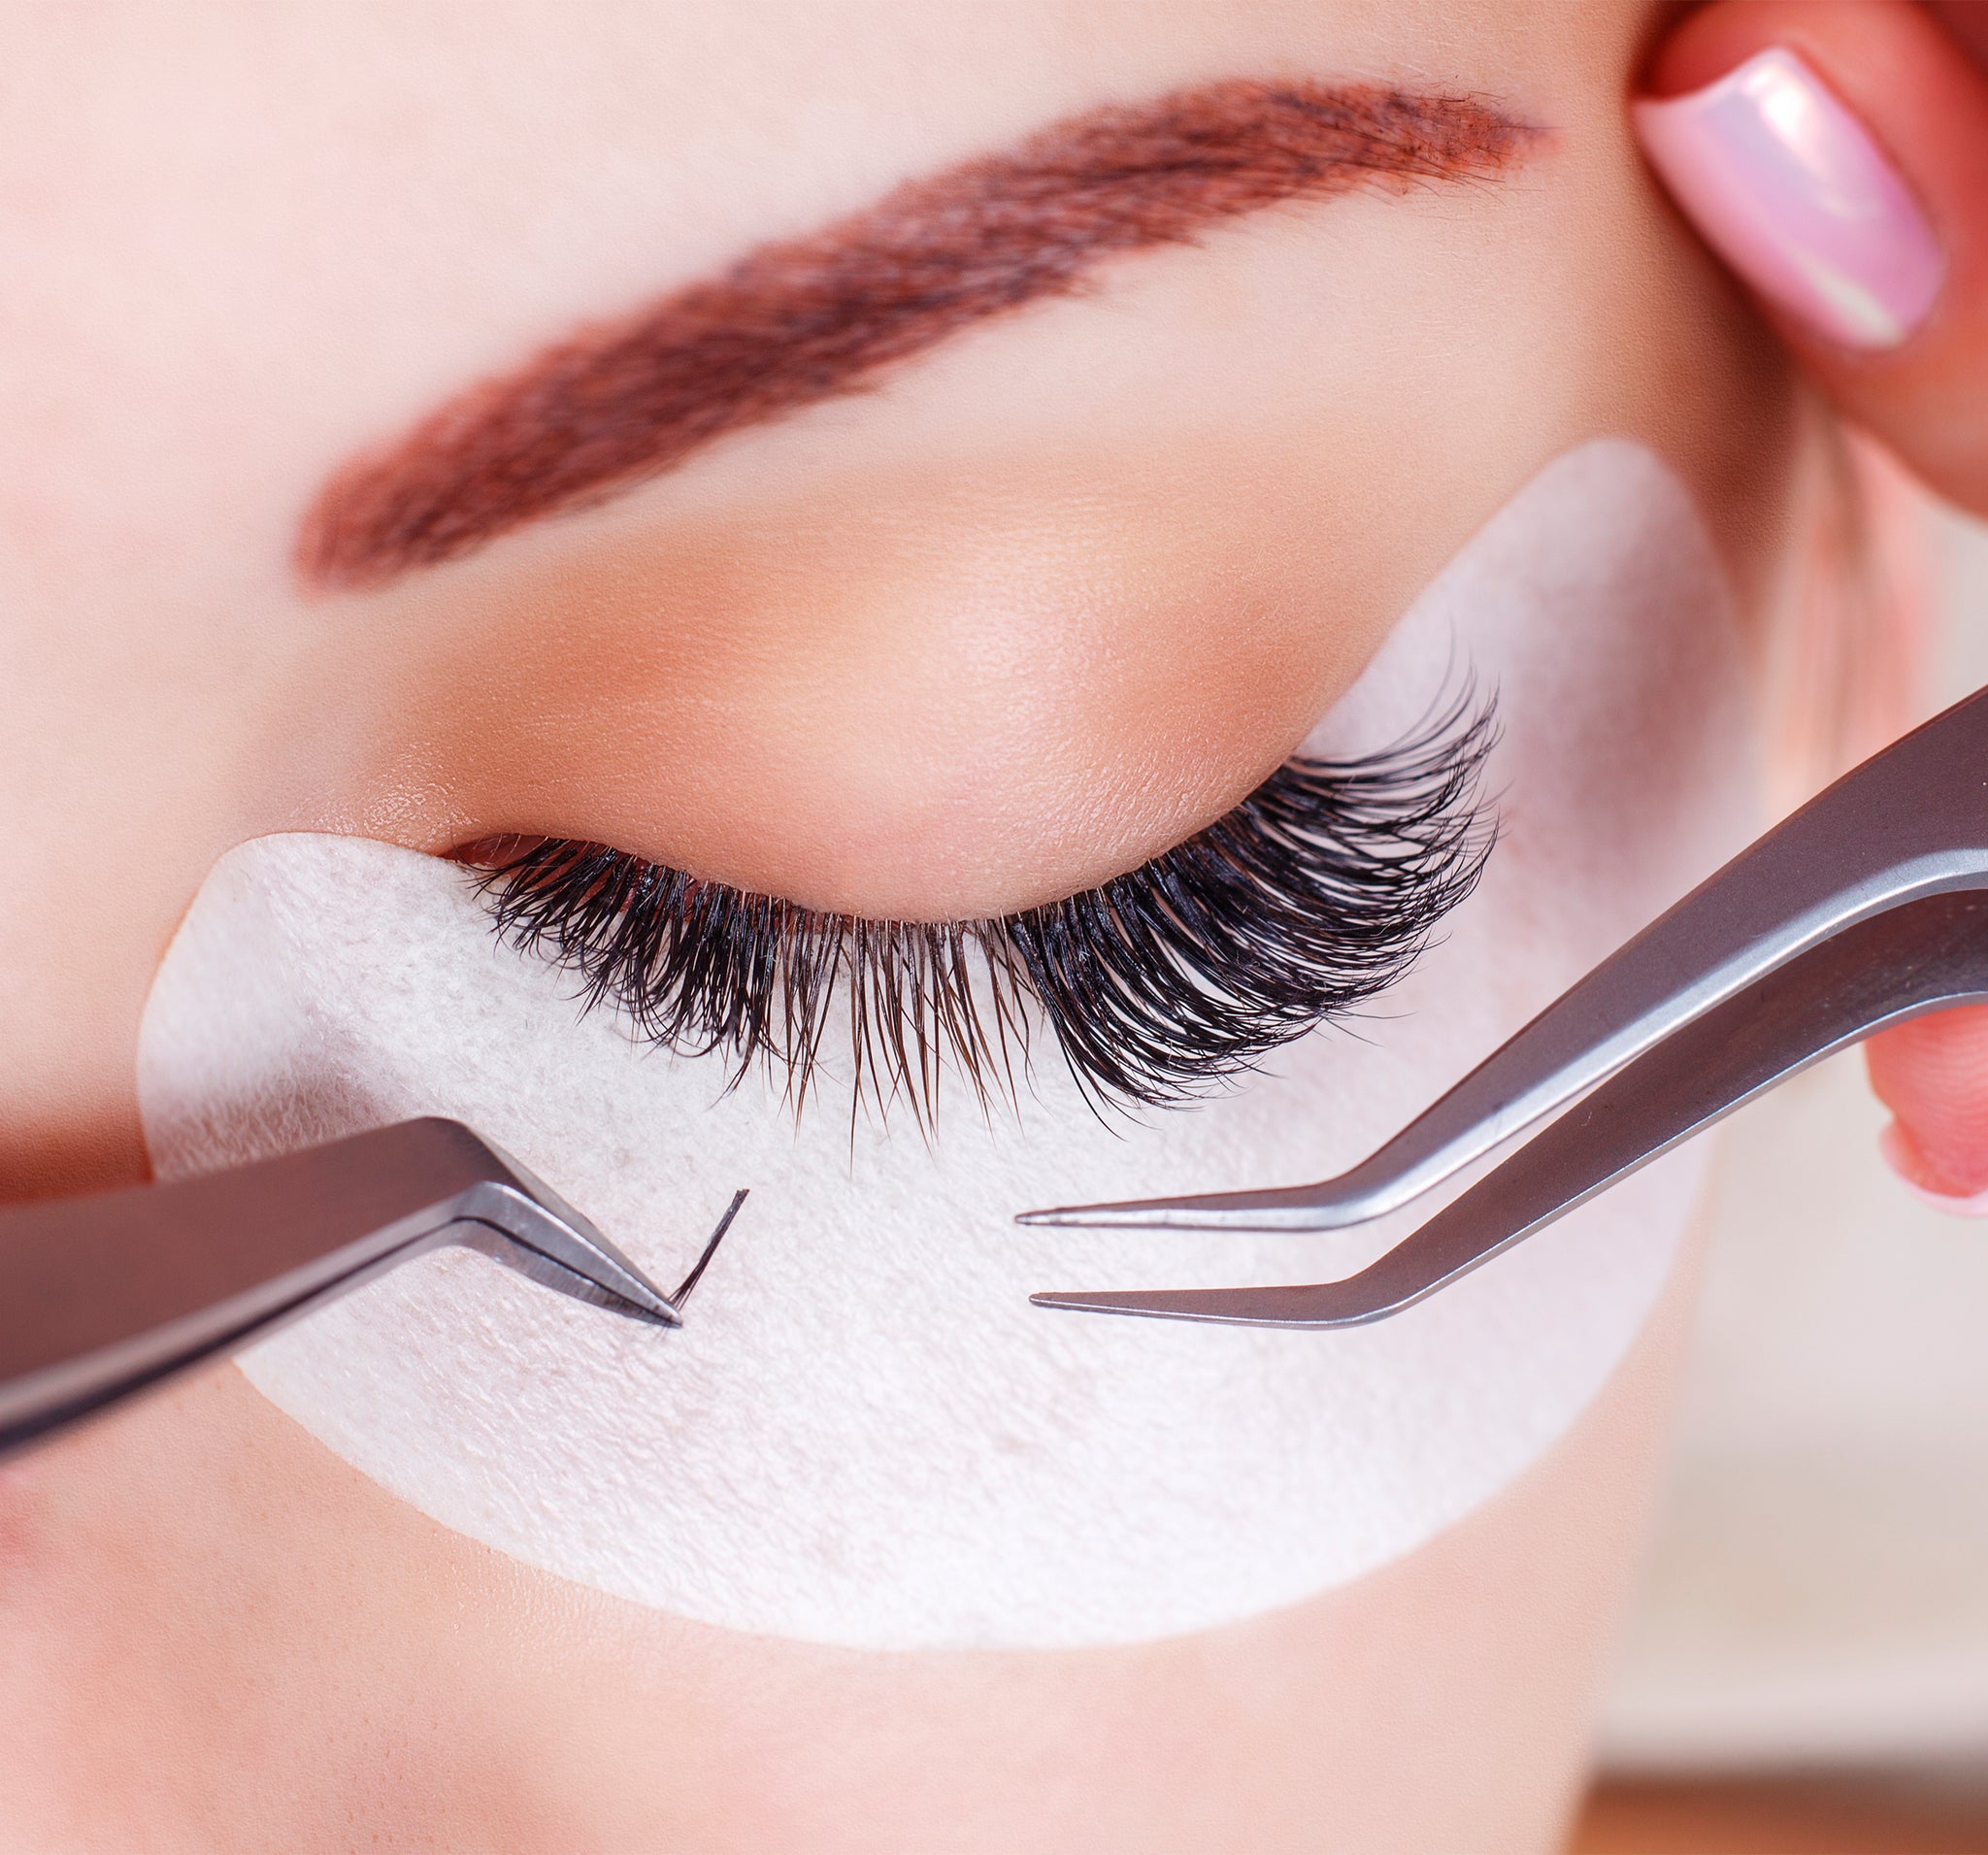 Black, white and clear eyelash glue – Stacy Lash Blog